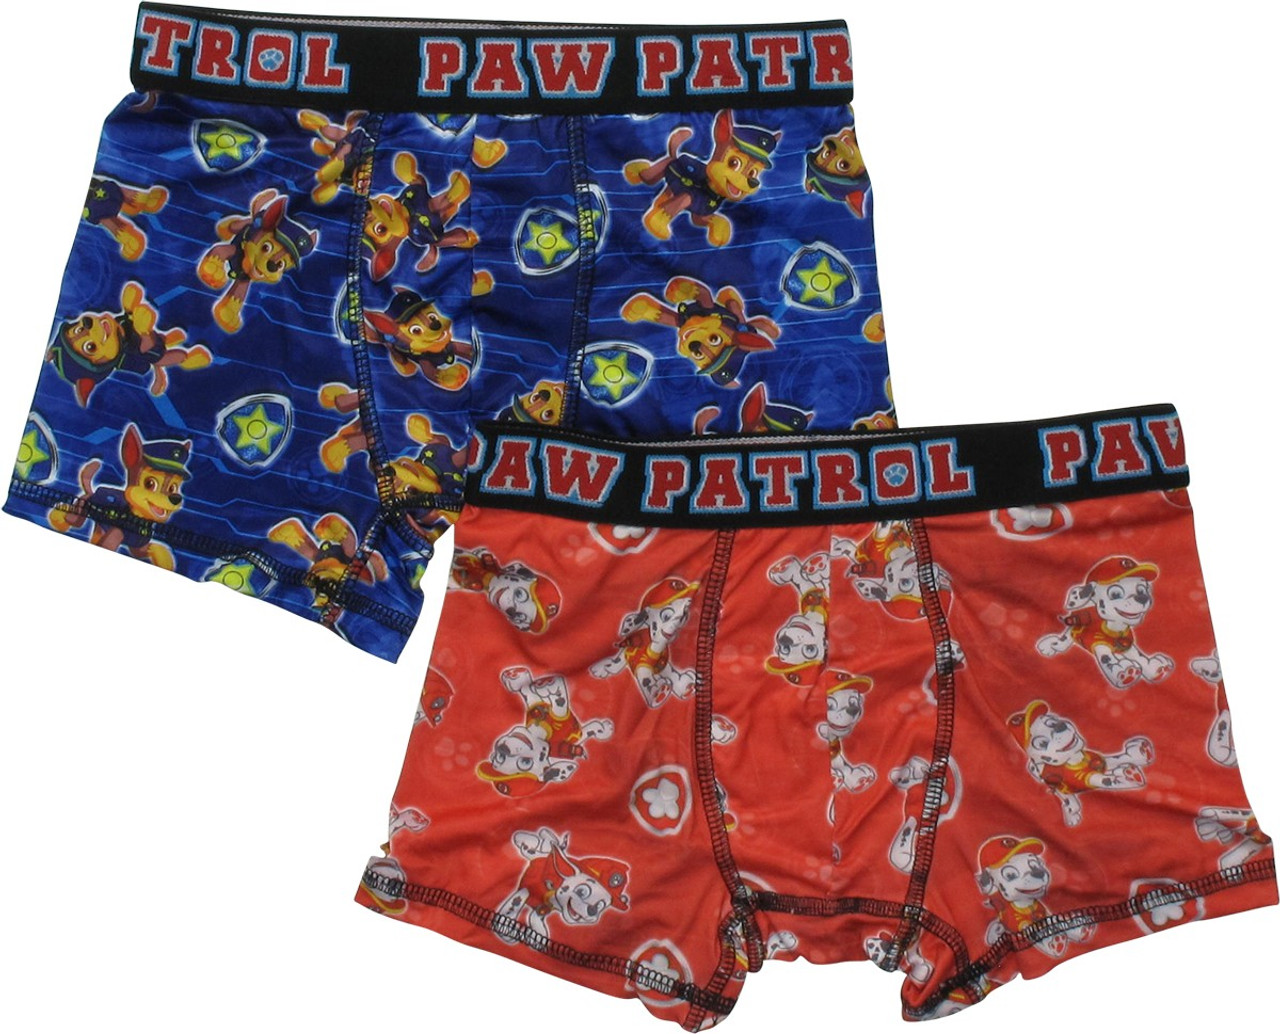  Paw Patrol Boys' Underwear Pack of 3 Size 18M